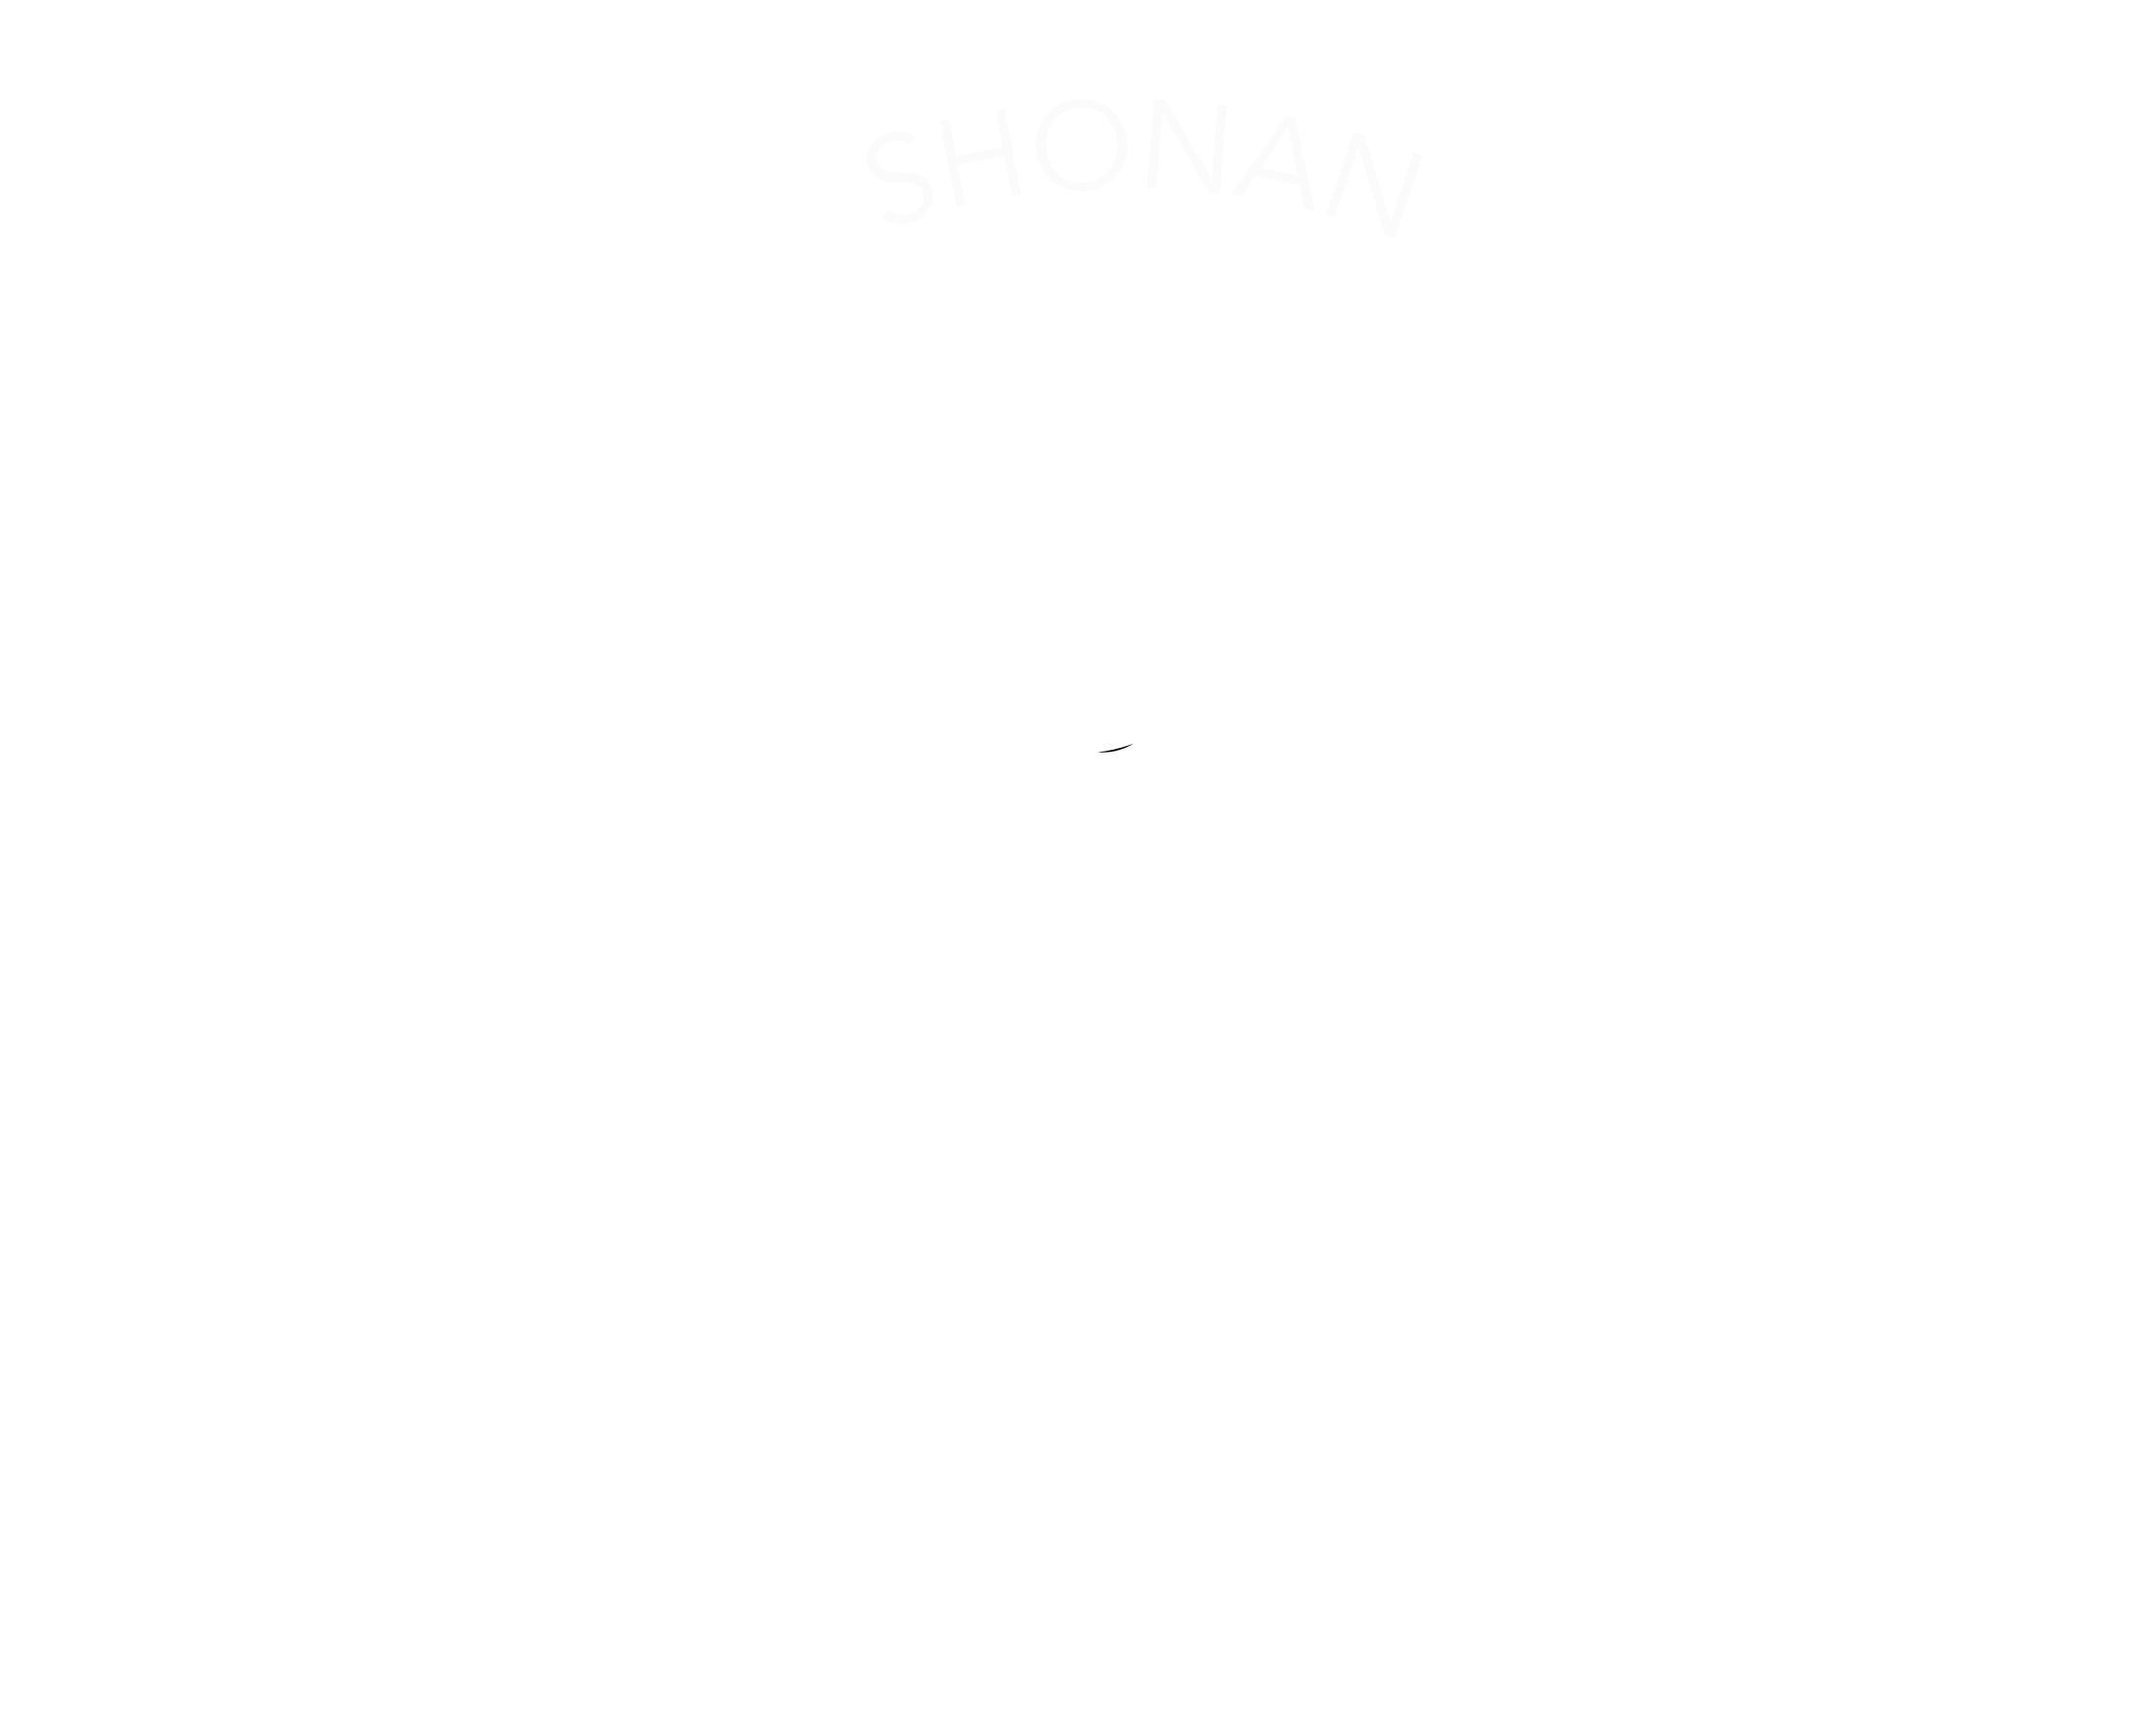 Cynosura sports performance